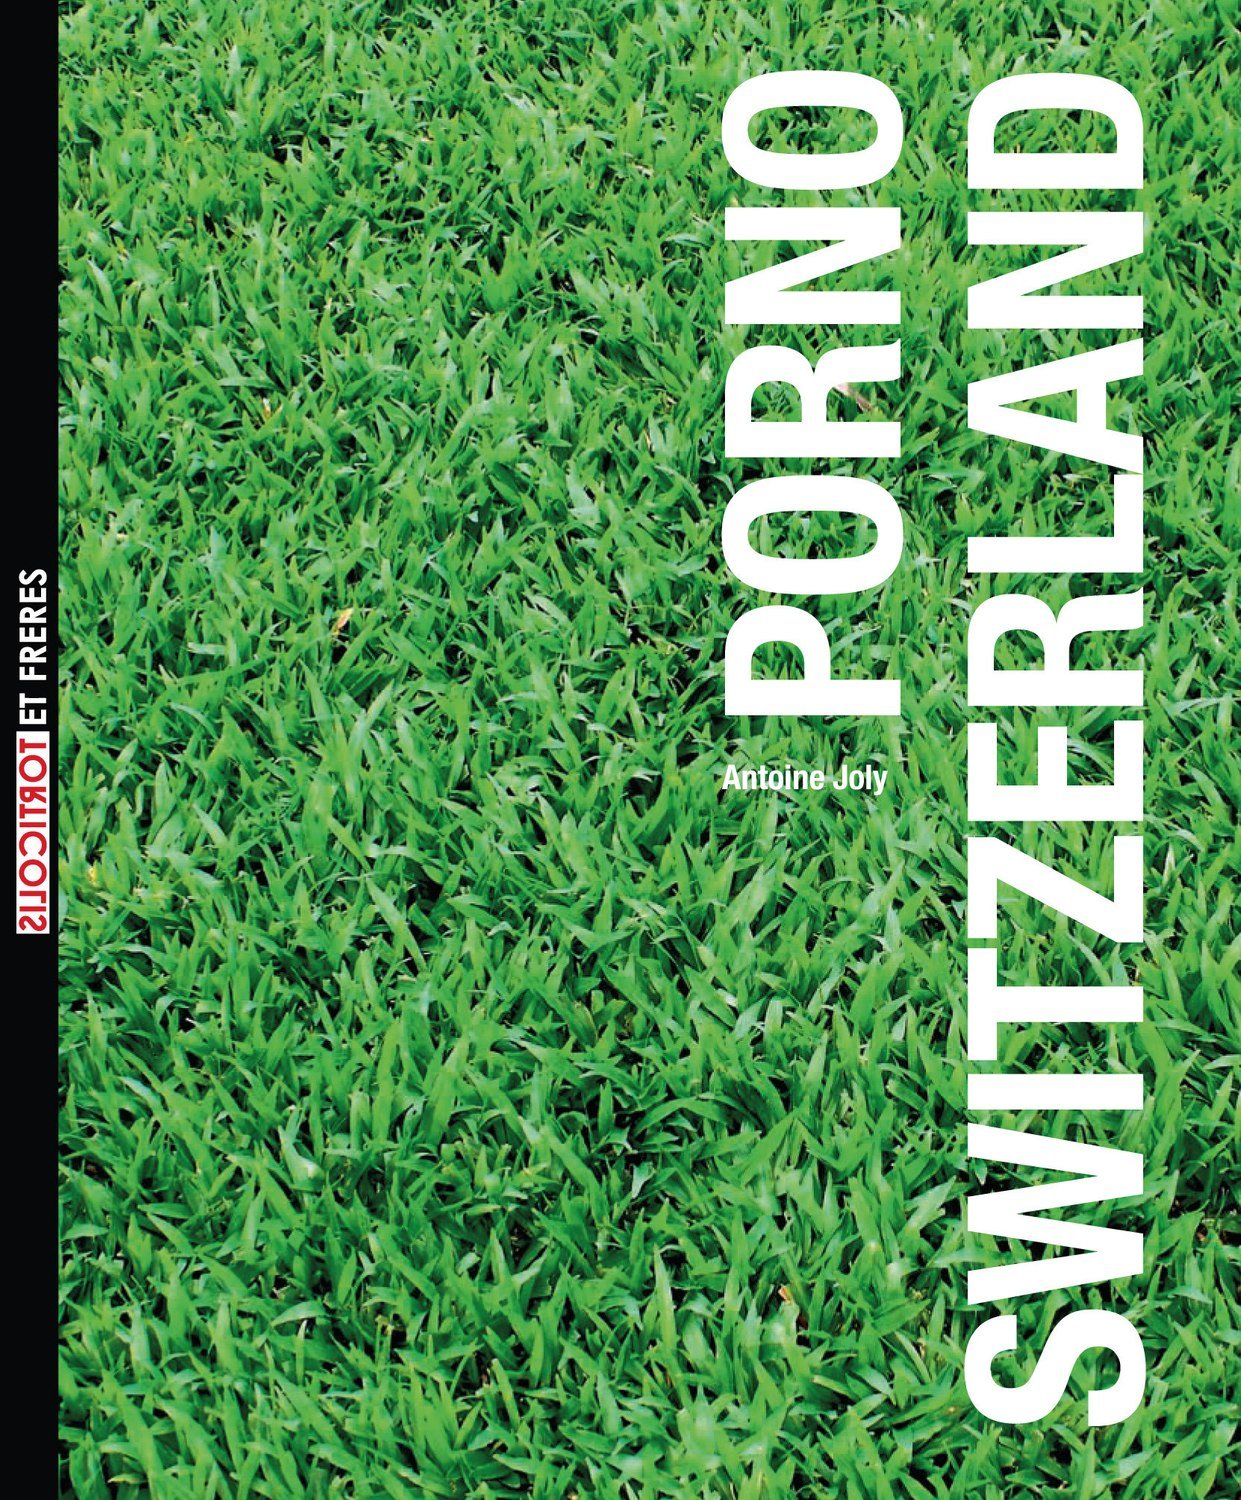 CD Musique_ Antoine Joly, "Porno Switzerland" (avec Lucien Dubuis)